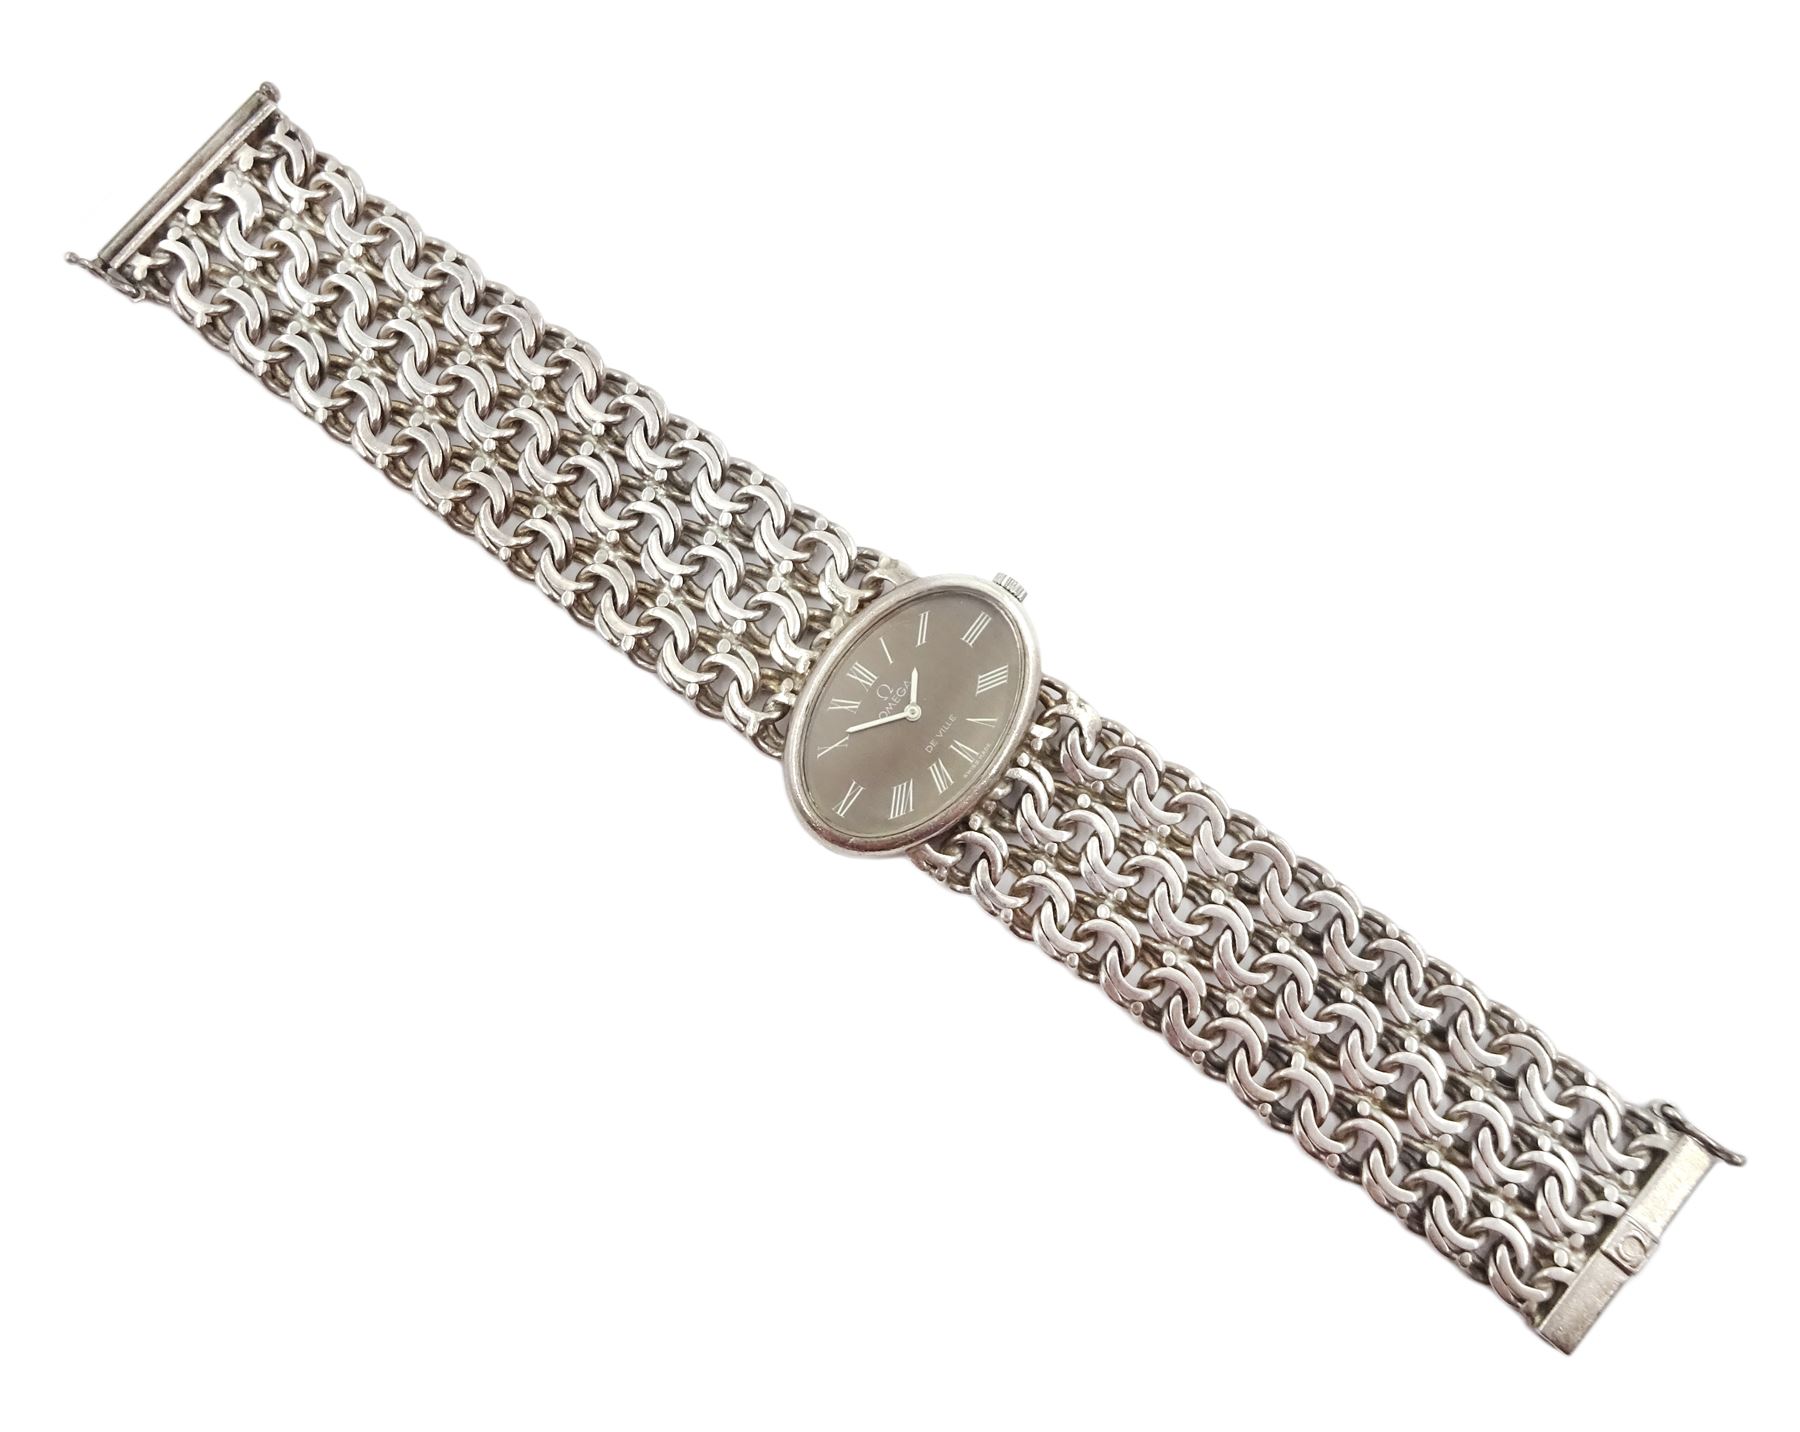 Omega De Ville ladies manual wind silver bracelet wristwatch - Image 2 of 3